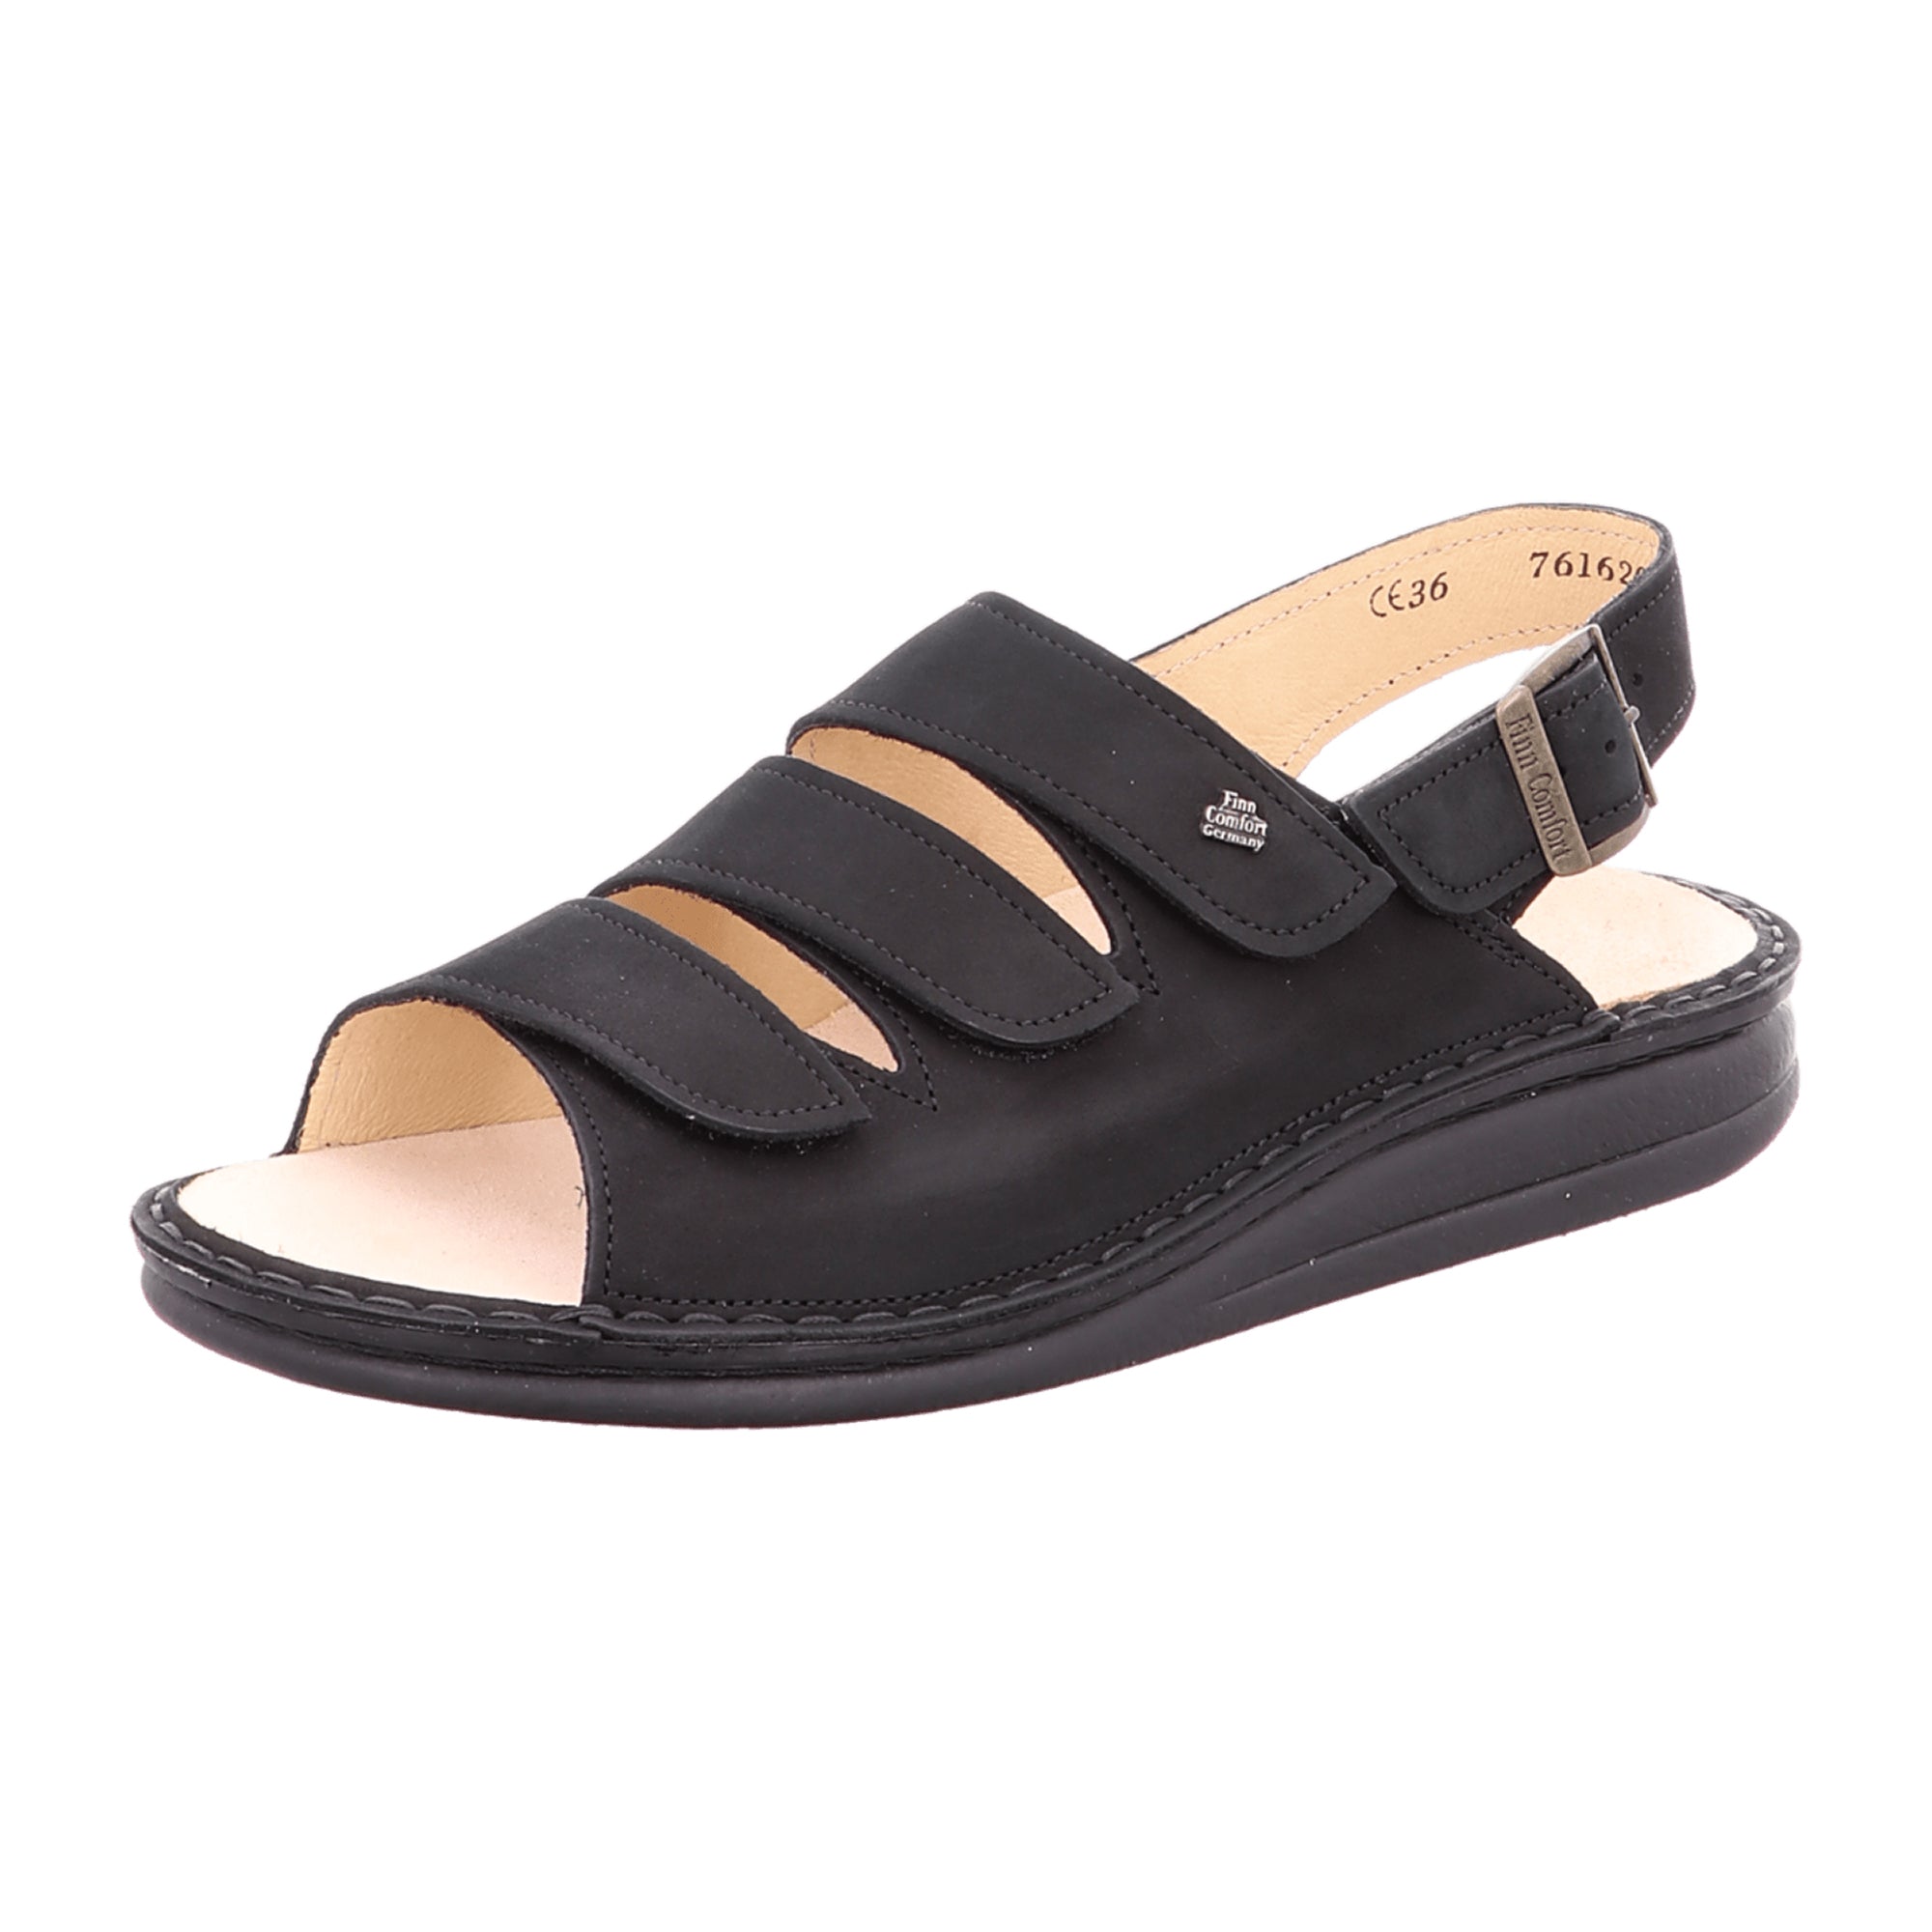 Finn Comfort Sylt Women's Sandals - Durable & Stylish Black Leather